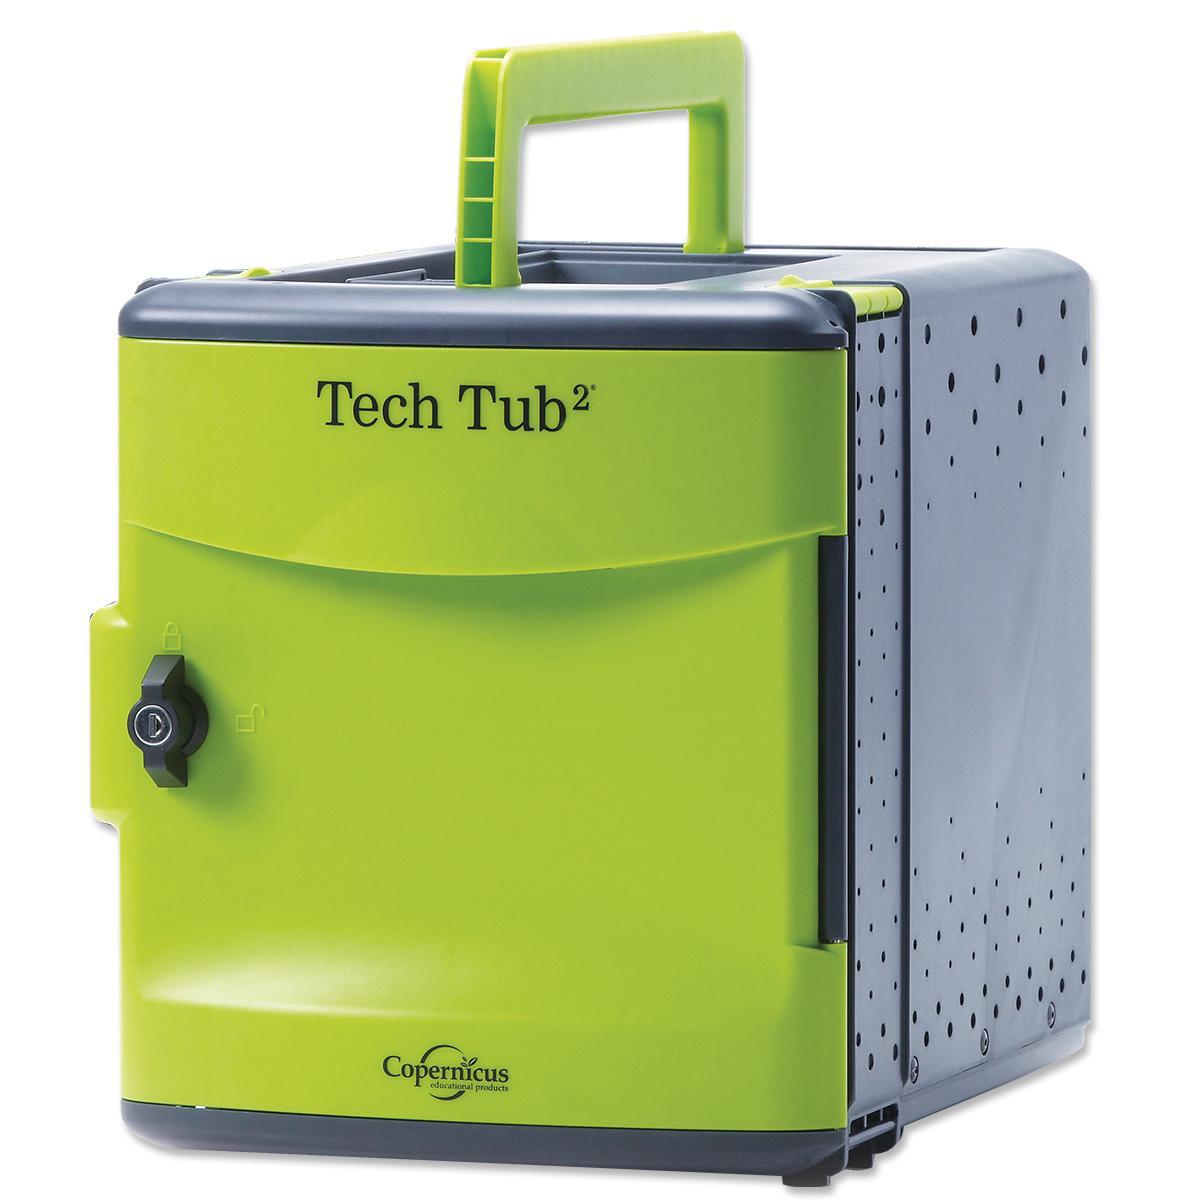  Tech Tub2® 